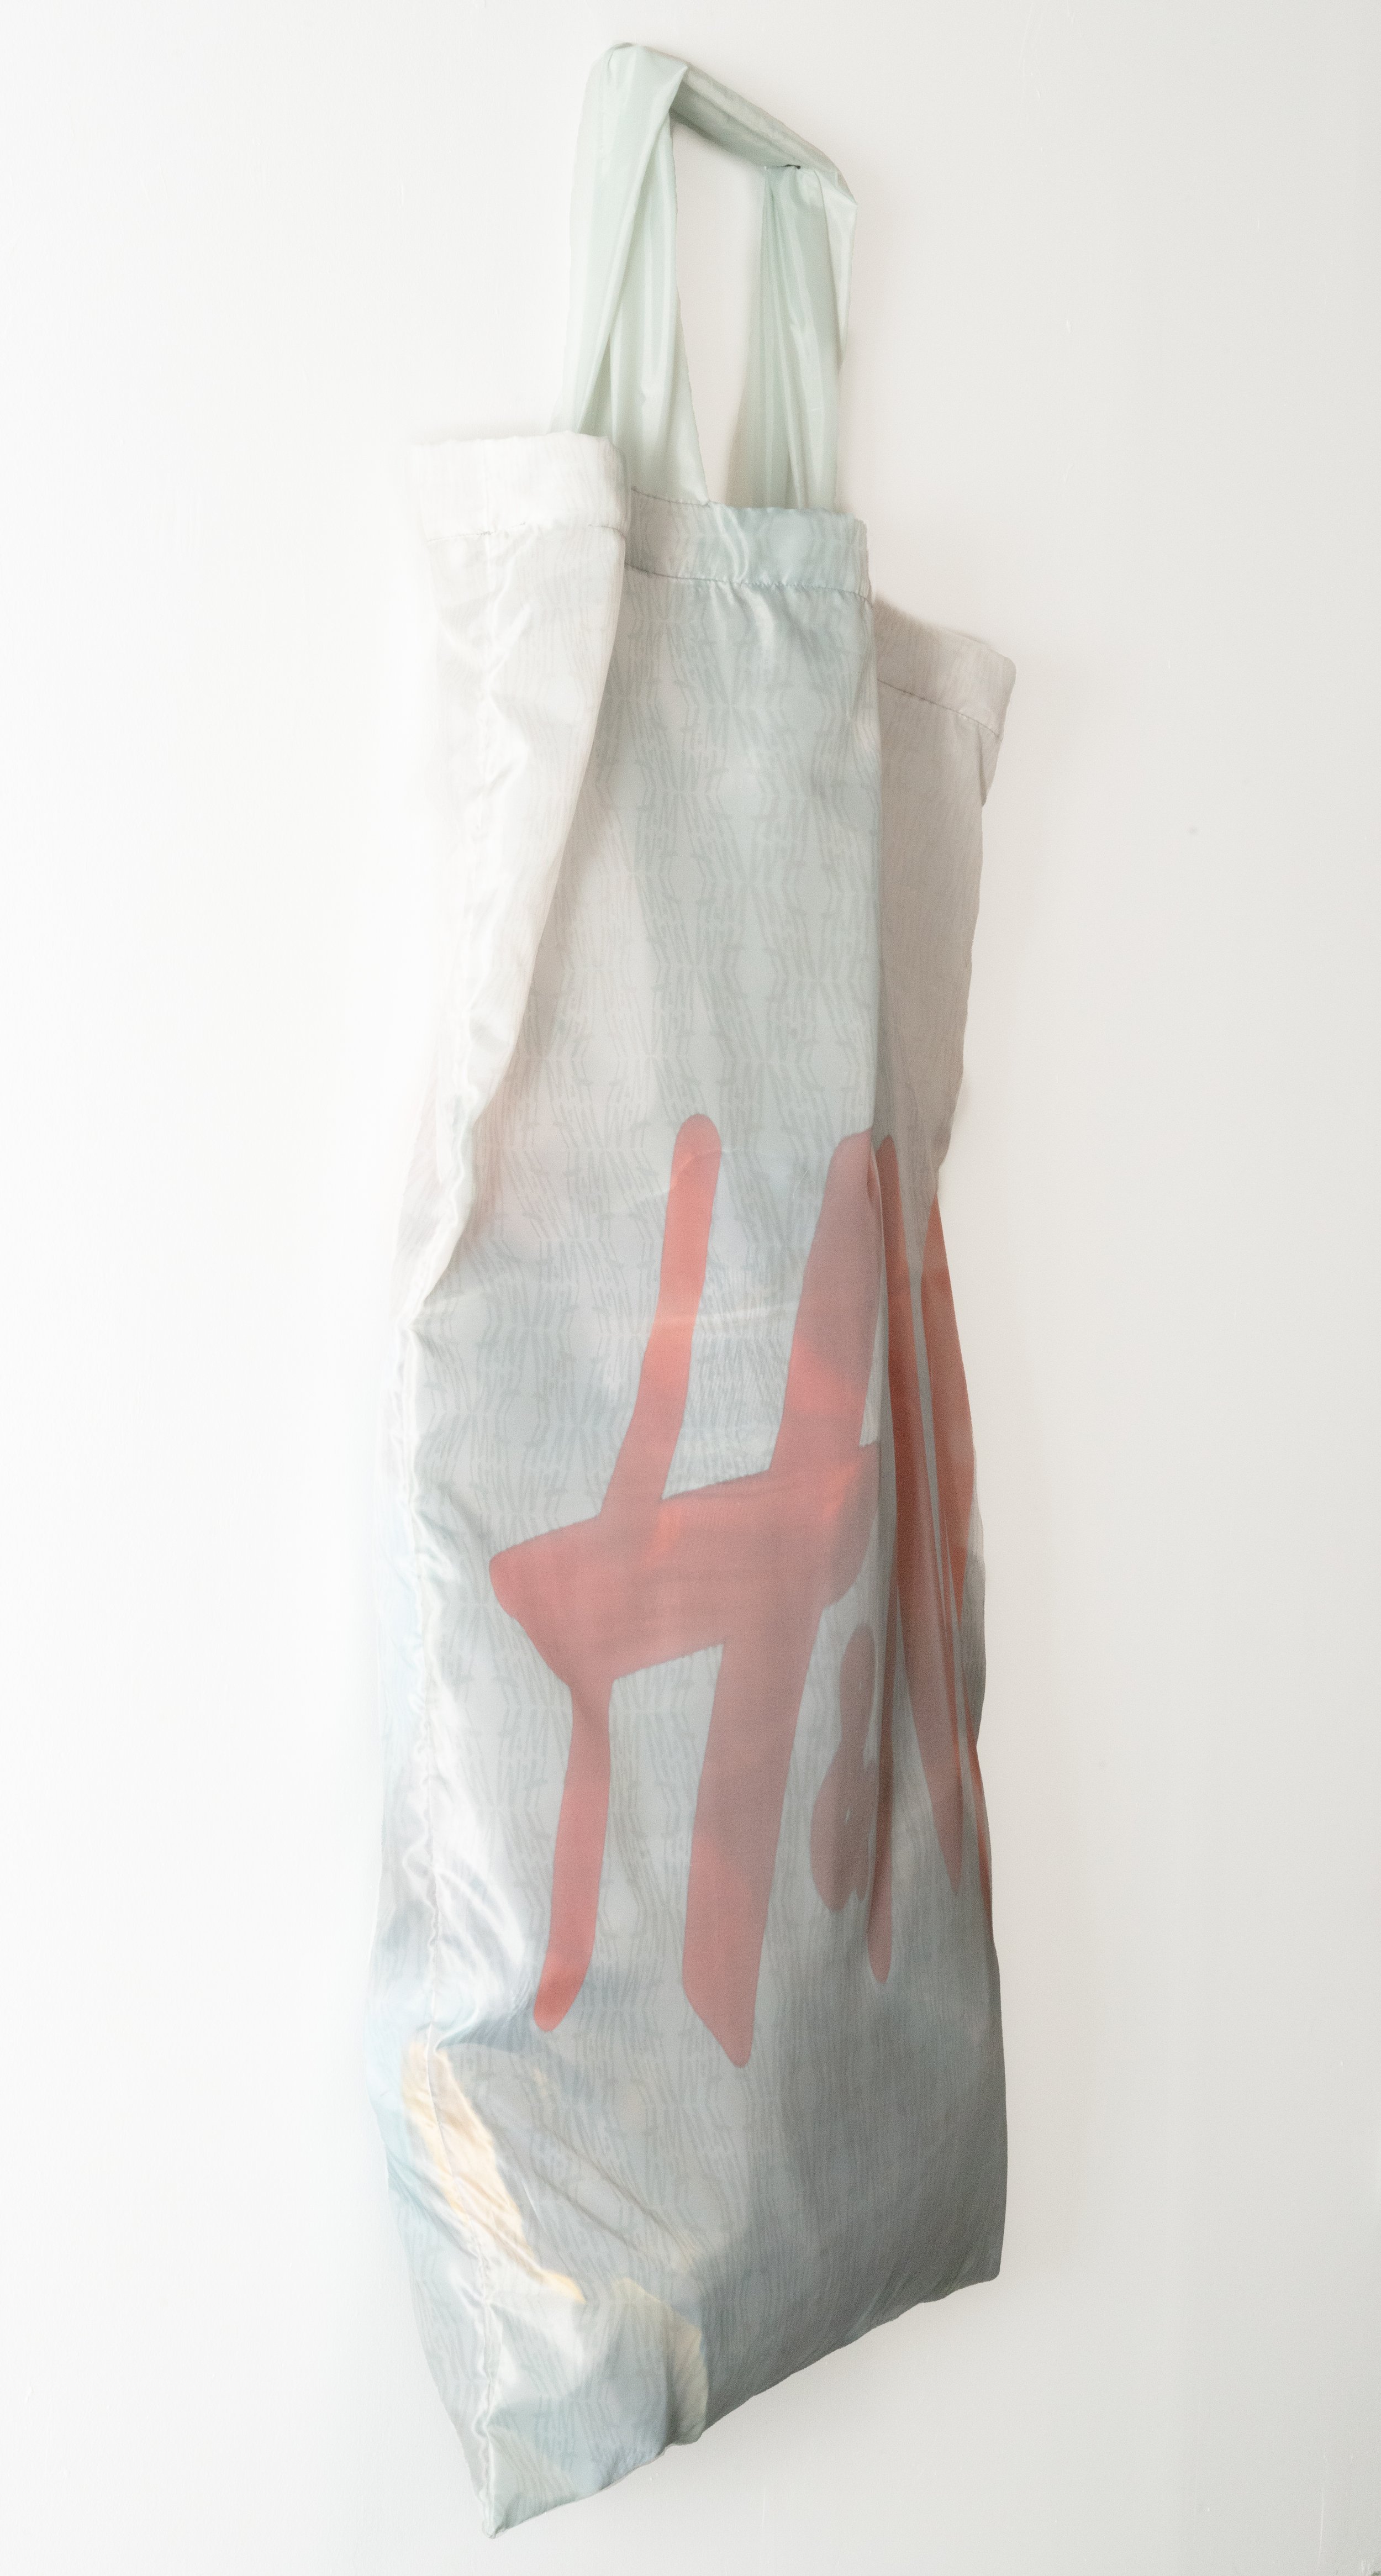 H&M Bag Side.jpg